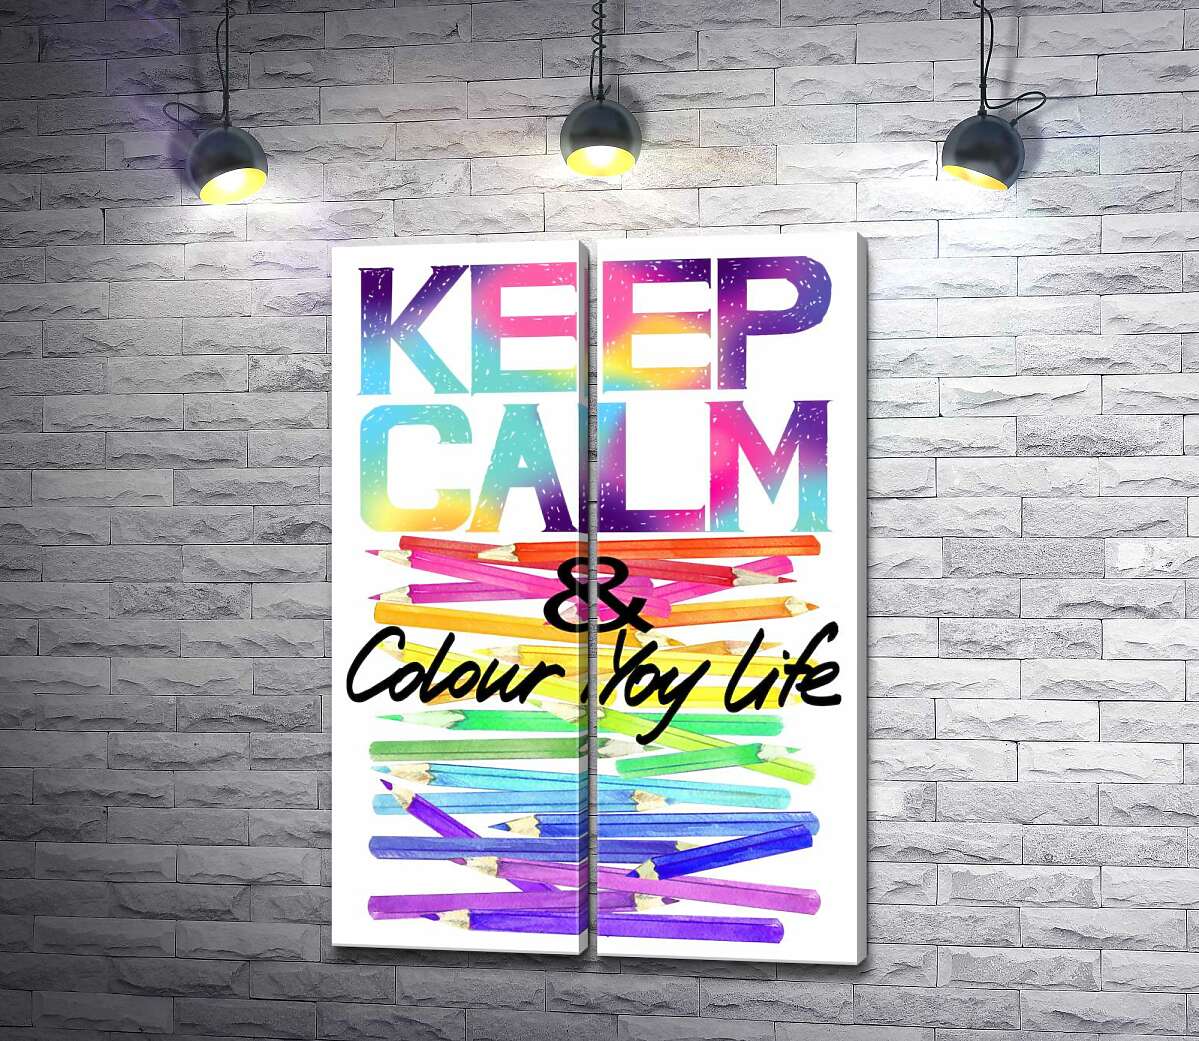 модульна картина Веселкові олівці з написом "keep calm and colour your life"